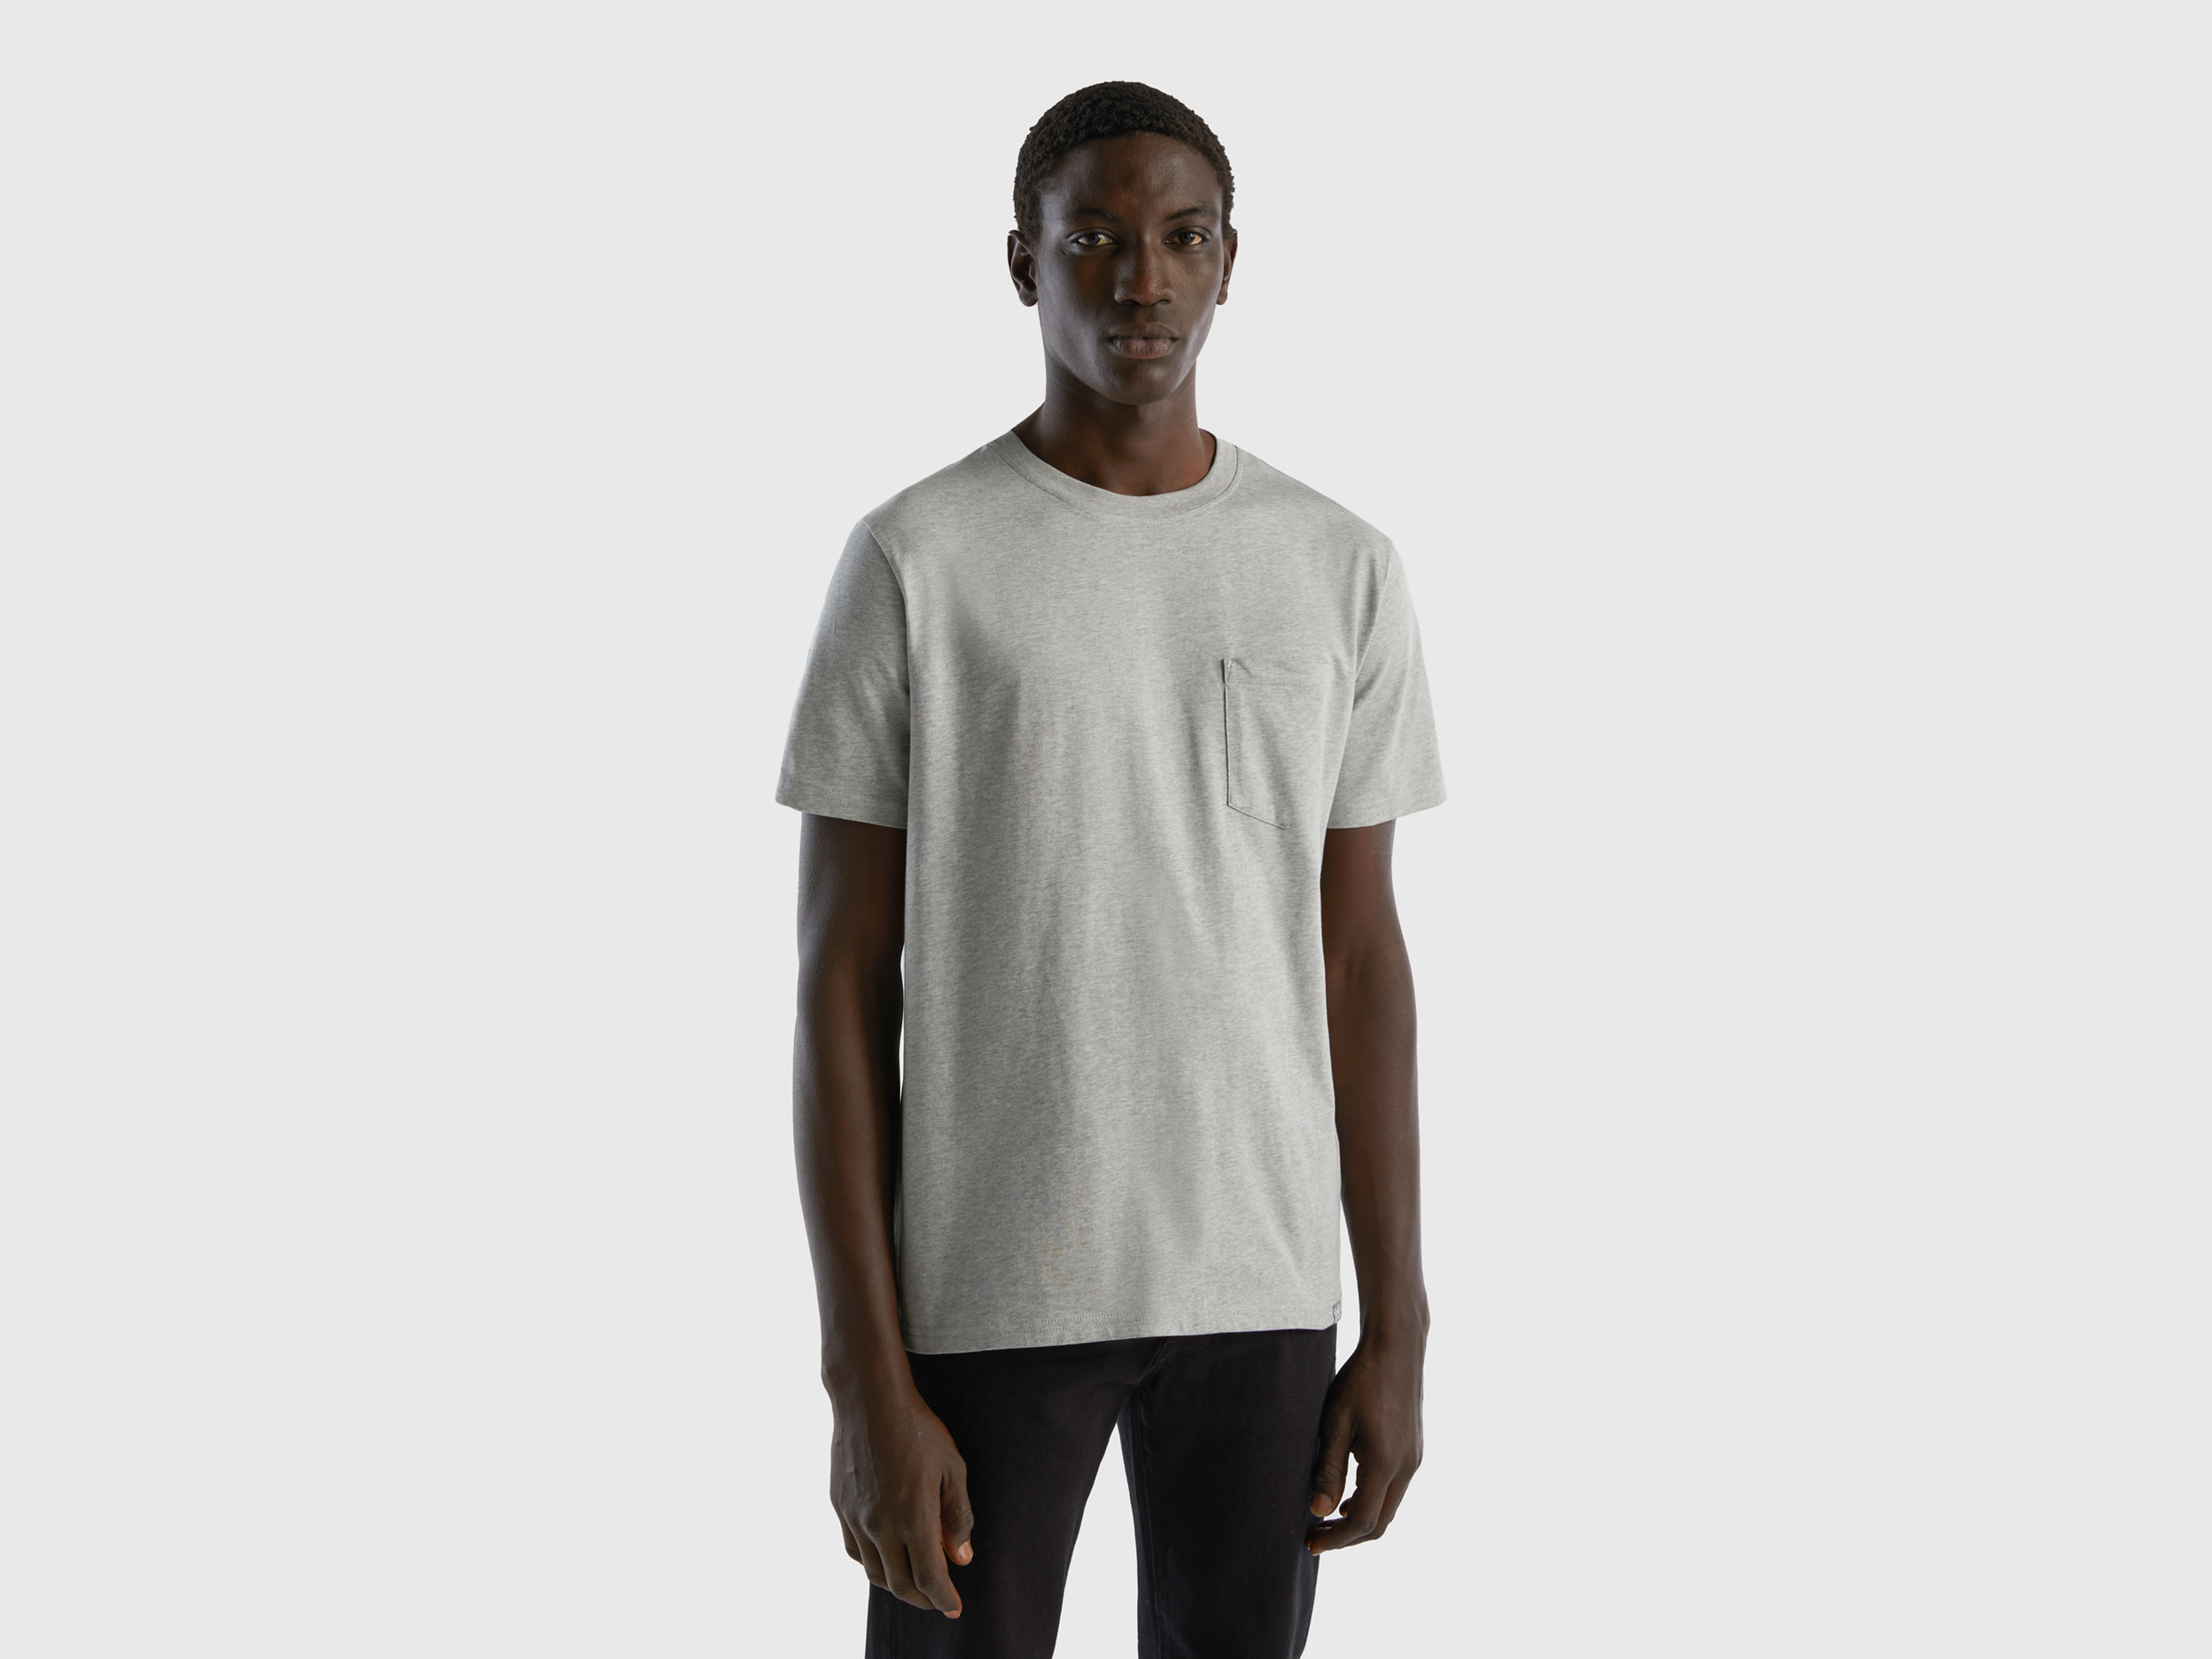 Benetton, 100% Cotton T-shirt With Pocket, size XXXL, Light Gray, Men